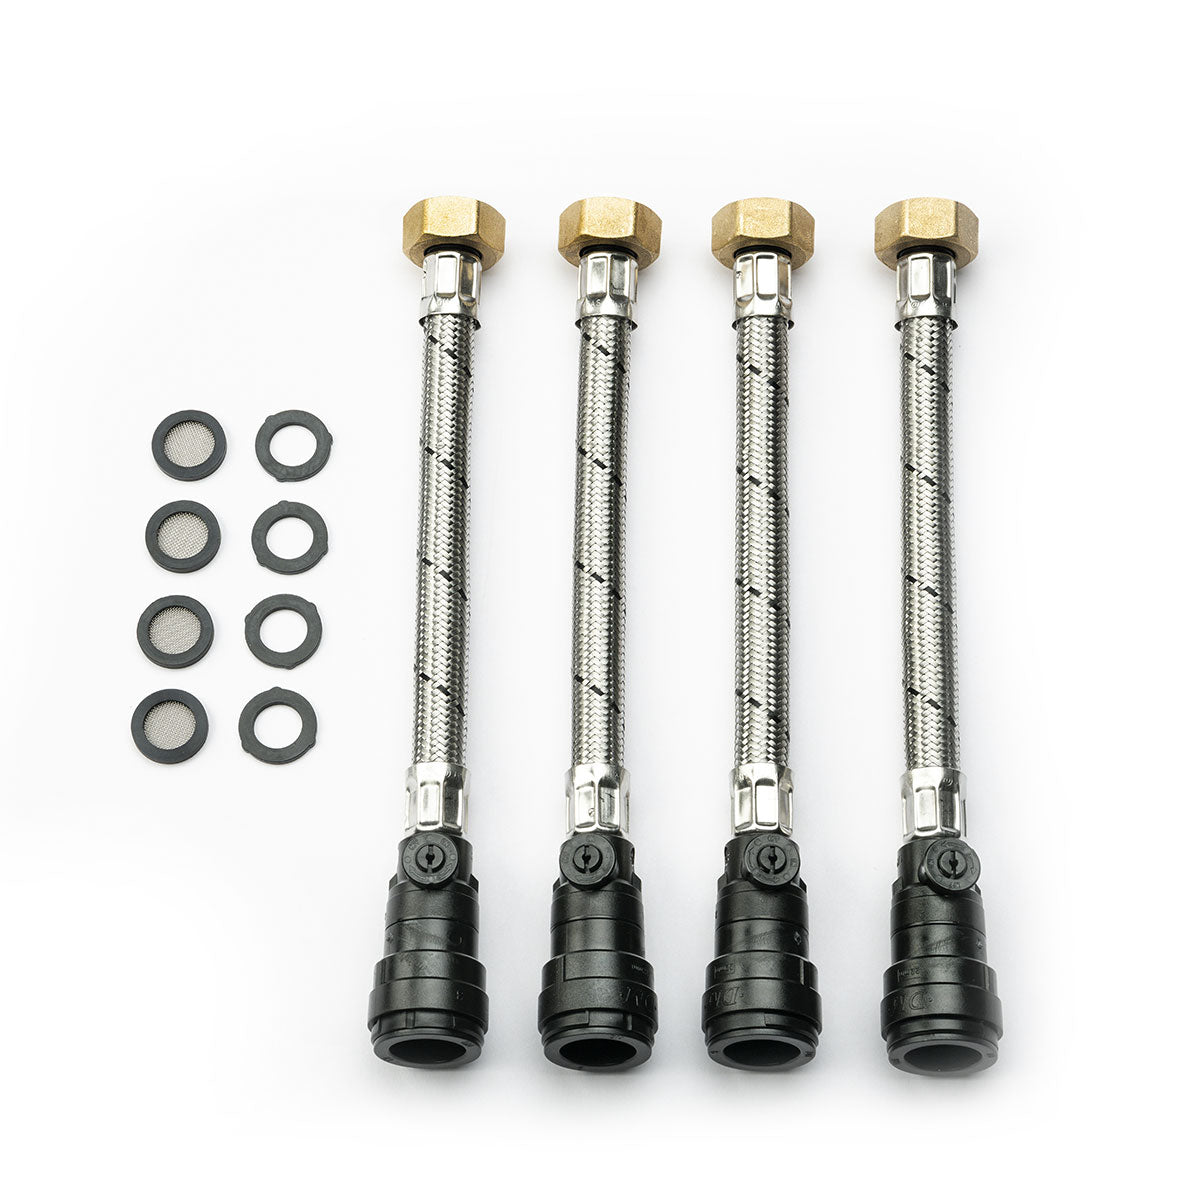 4 x 15mm to 22mm Anti Vibration Coupler (4 x Straight) (Brass Nut) (AV7)